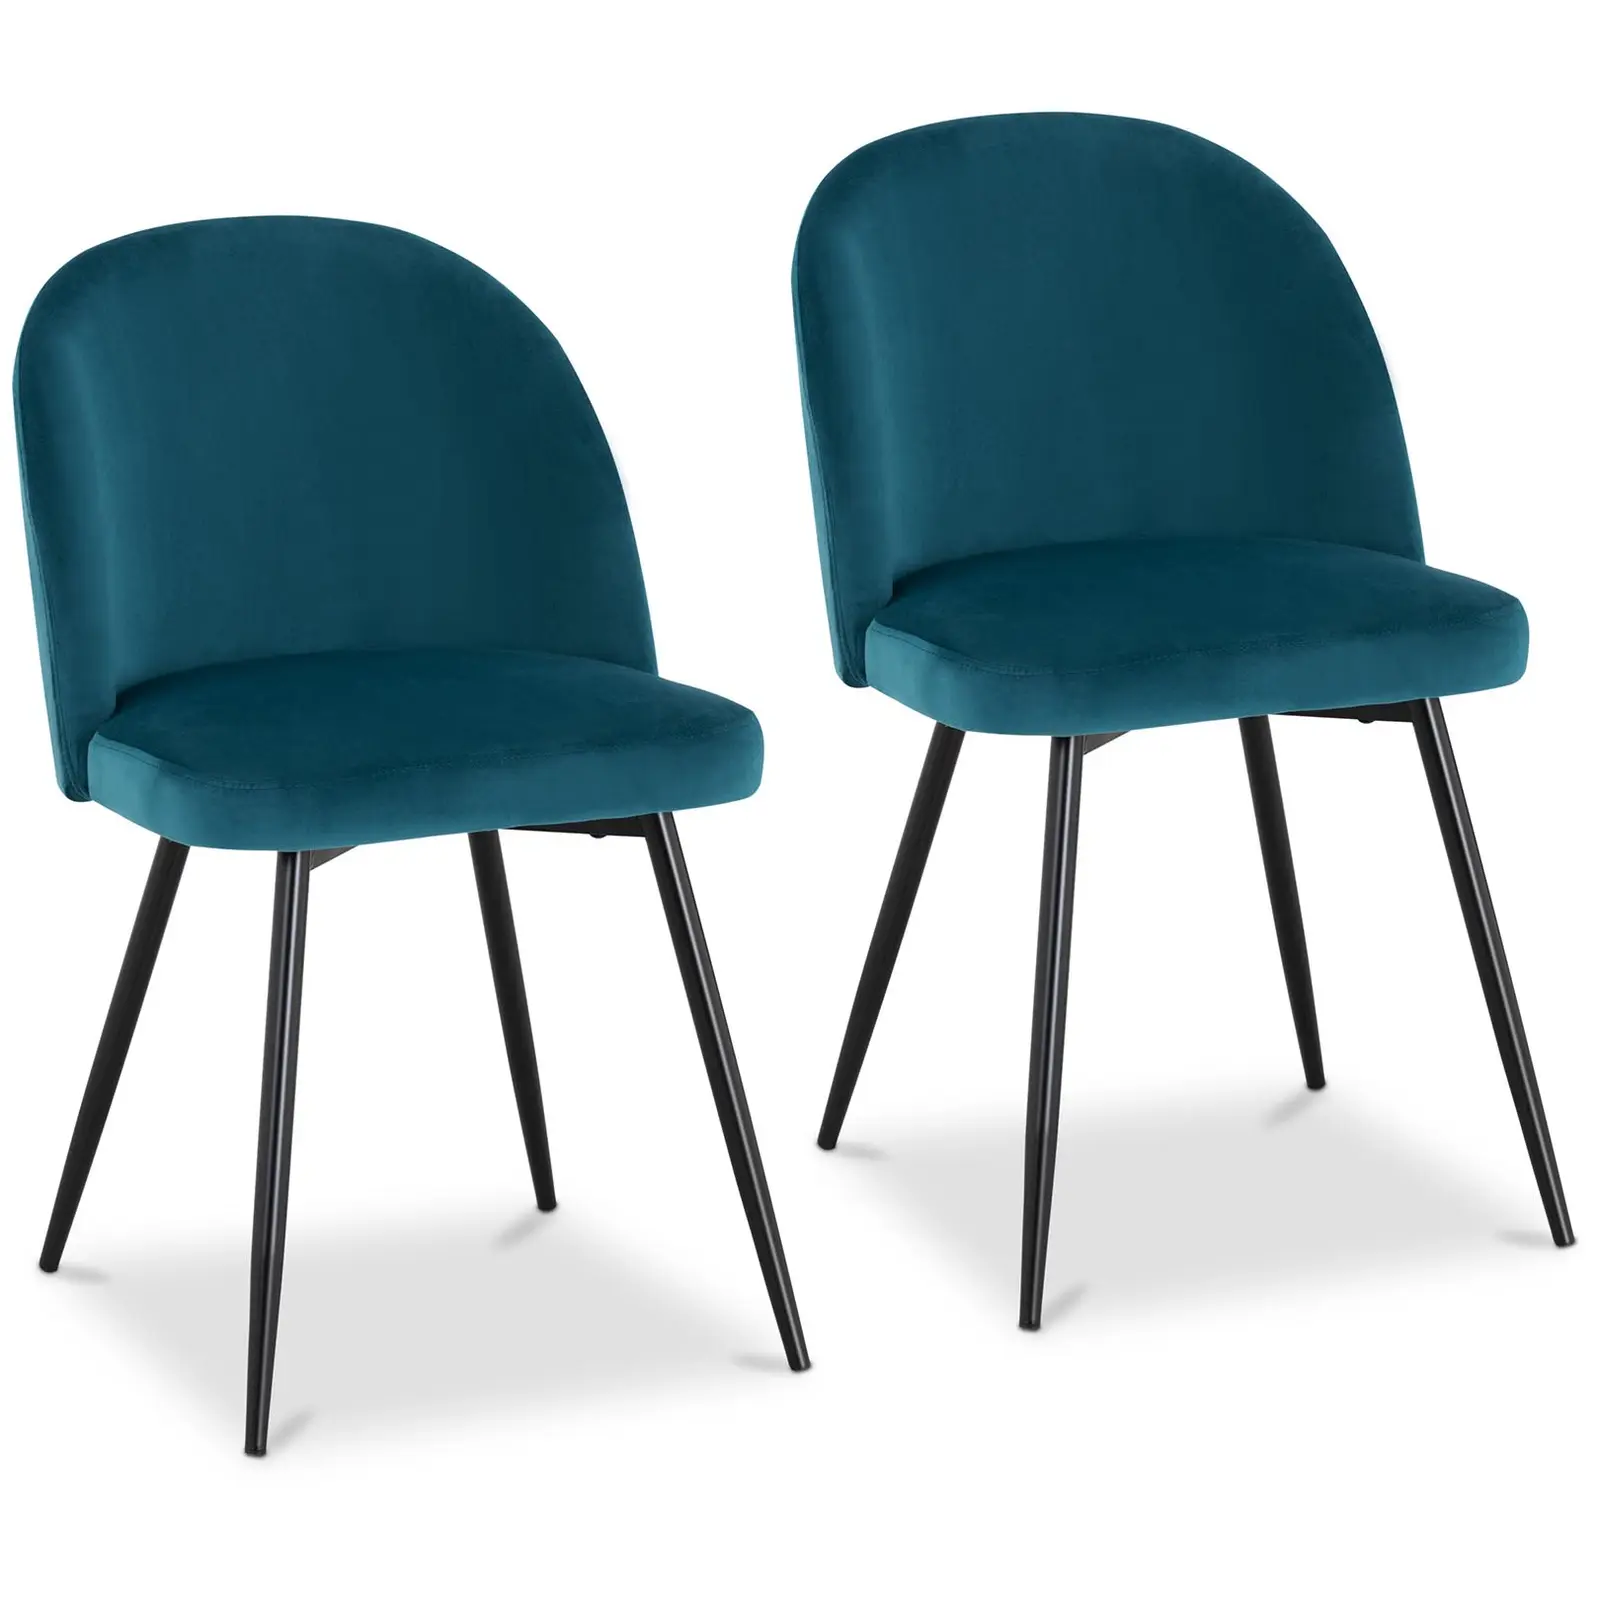 Outlet Krzesło tapicerowane - turkusowe - welurowe - 2 szt.